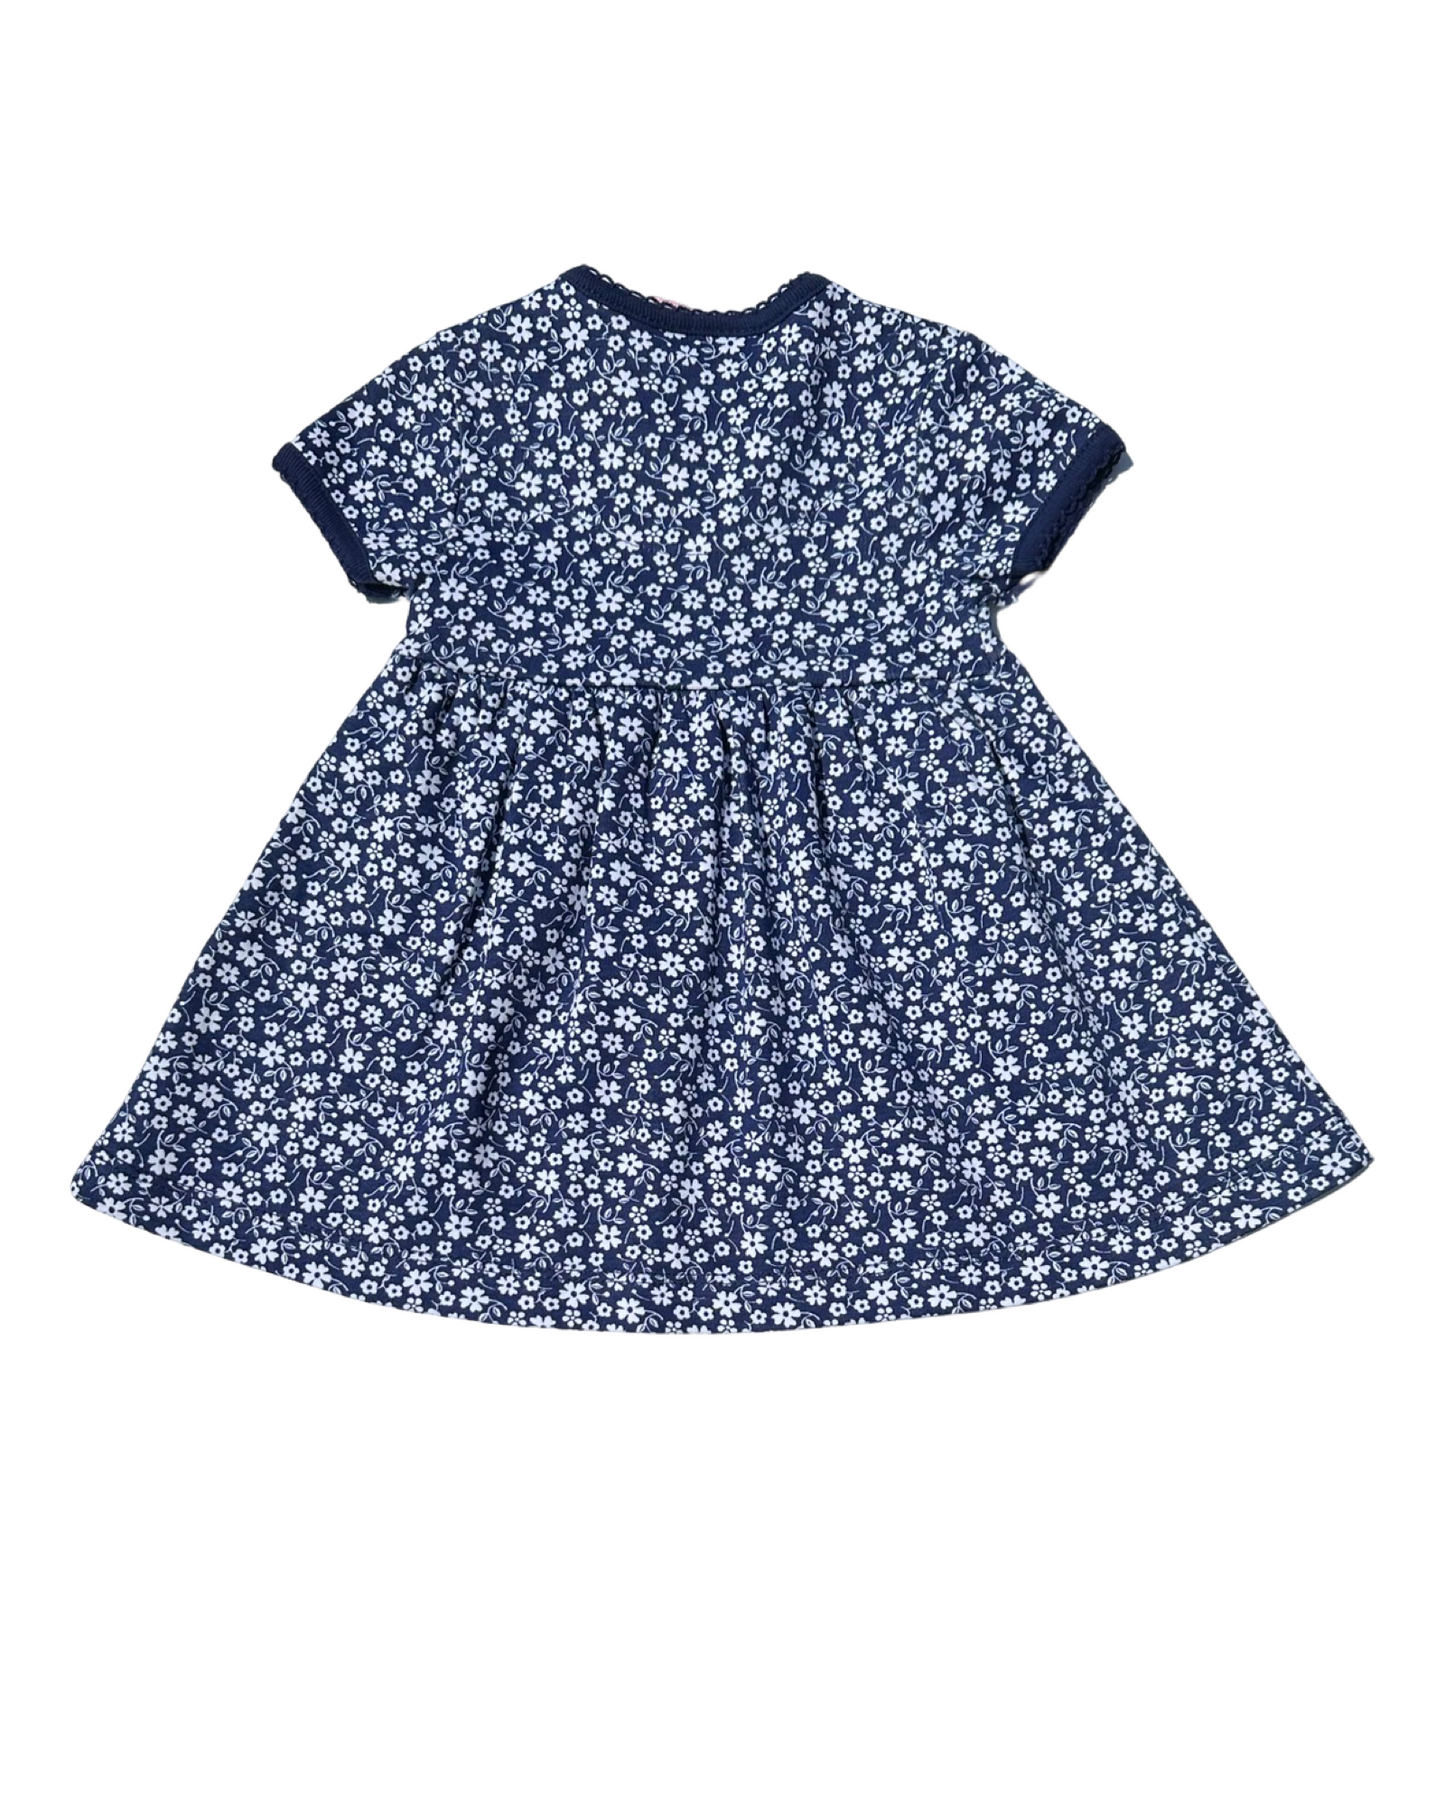 JoJo Maman Bebe blue floral print dress (size 0-3mths)